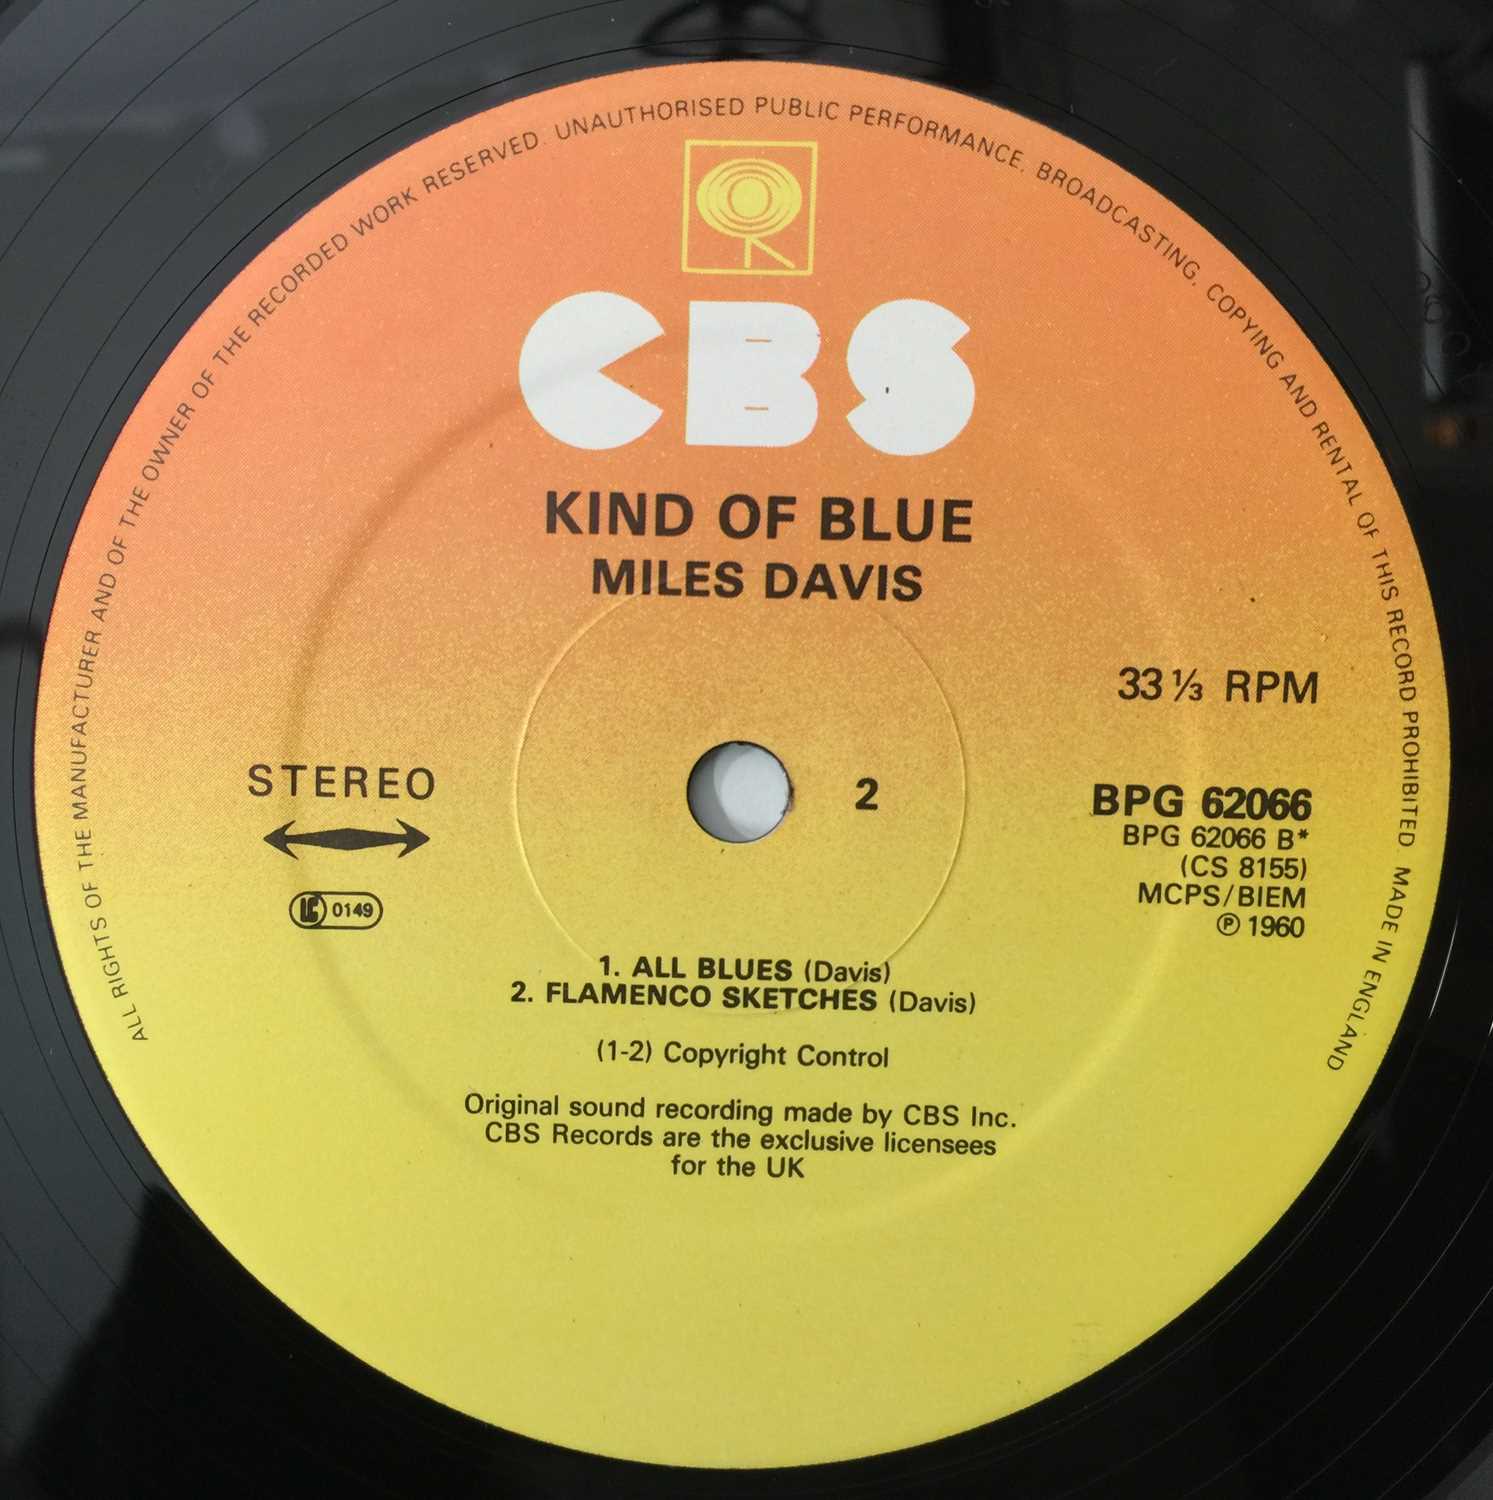 MILES DAVIS - KIND OF BLUE LP (CBS BPG 62066 - NIMBUS PRESSING) - Image 5 of 5